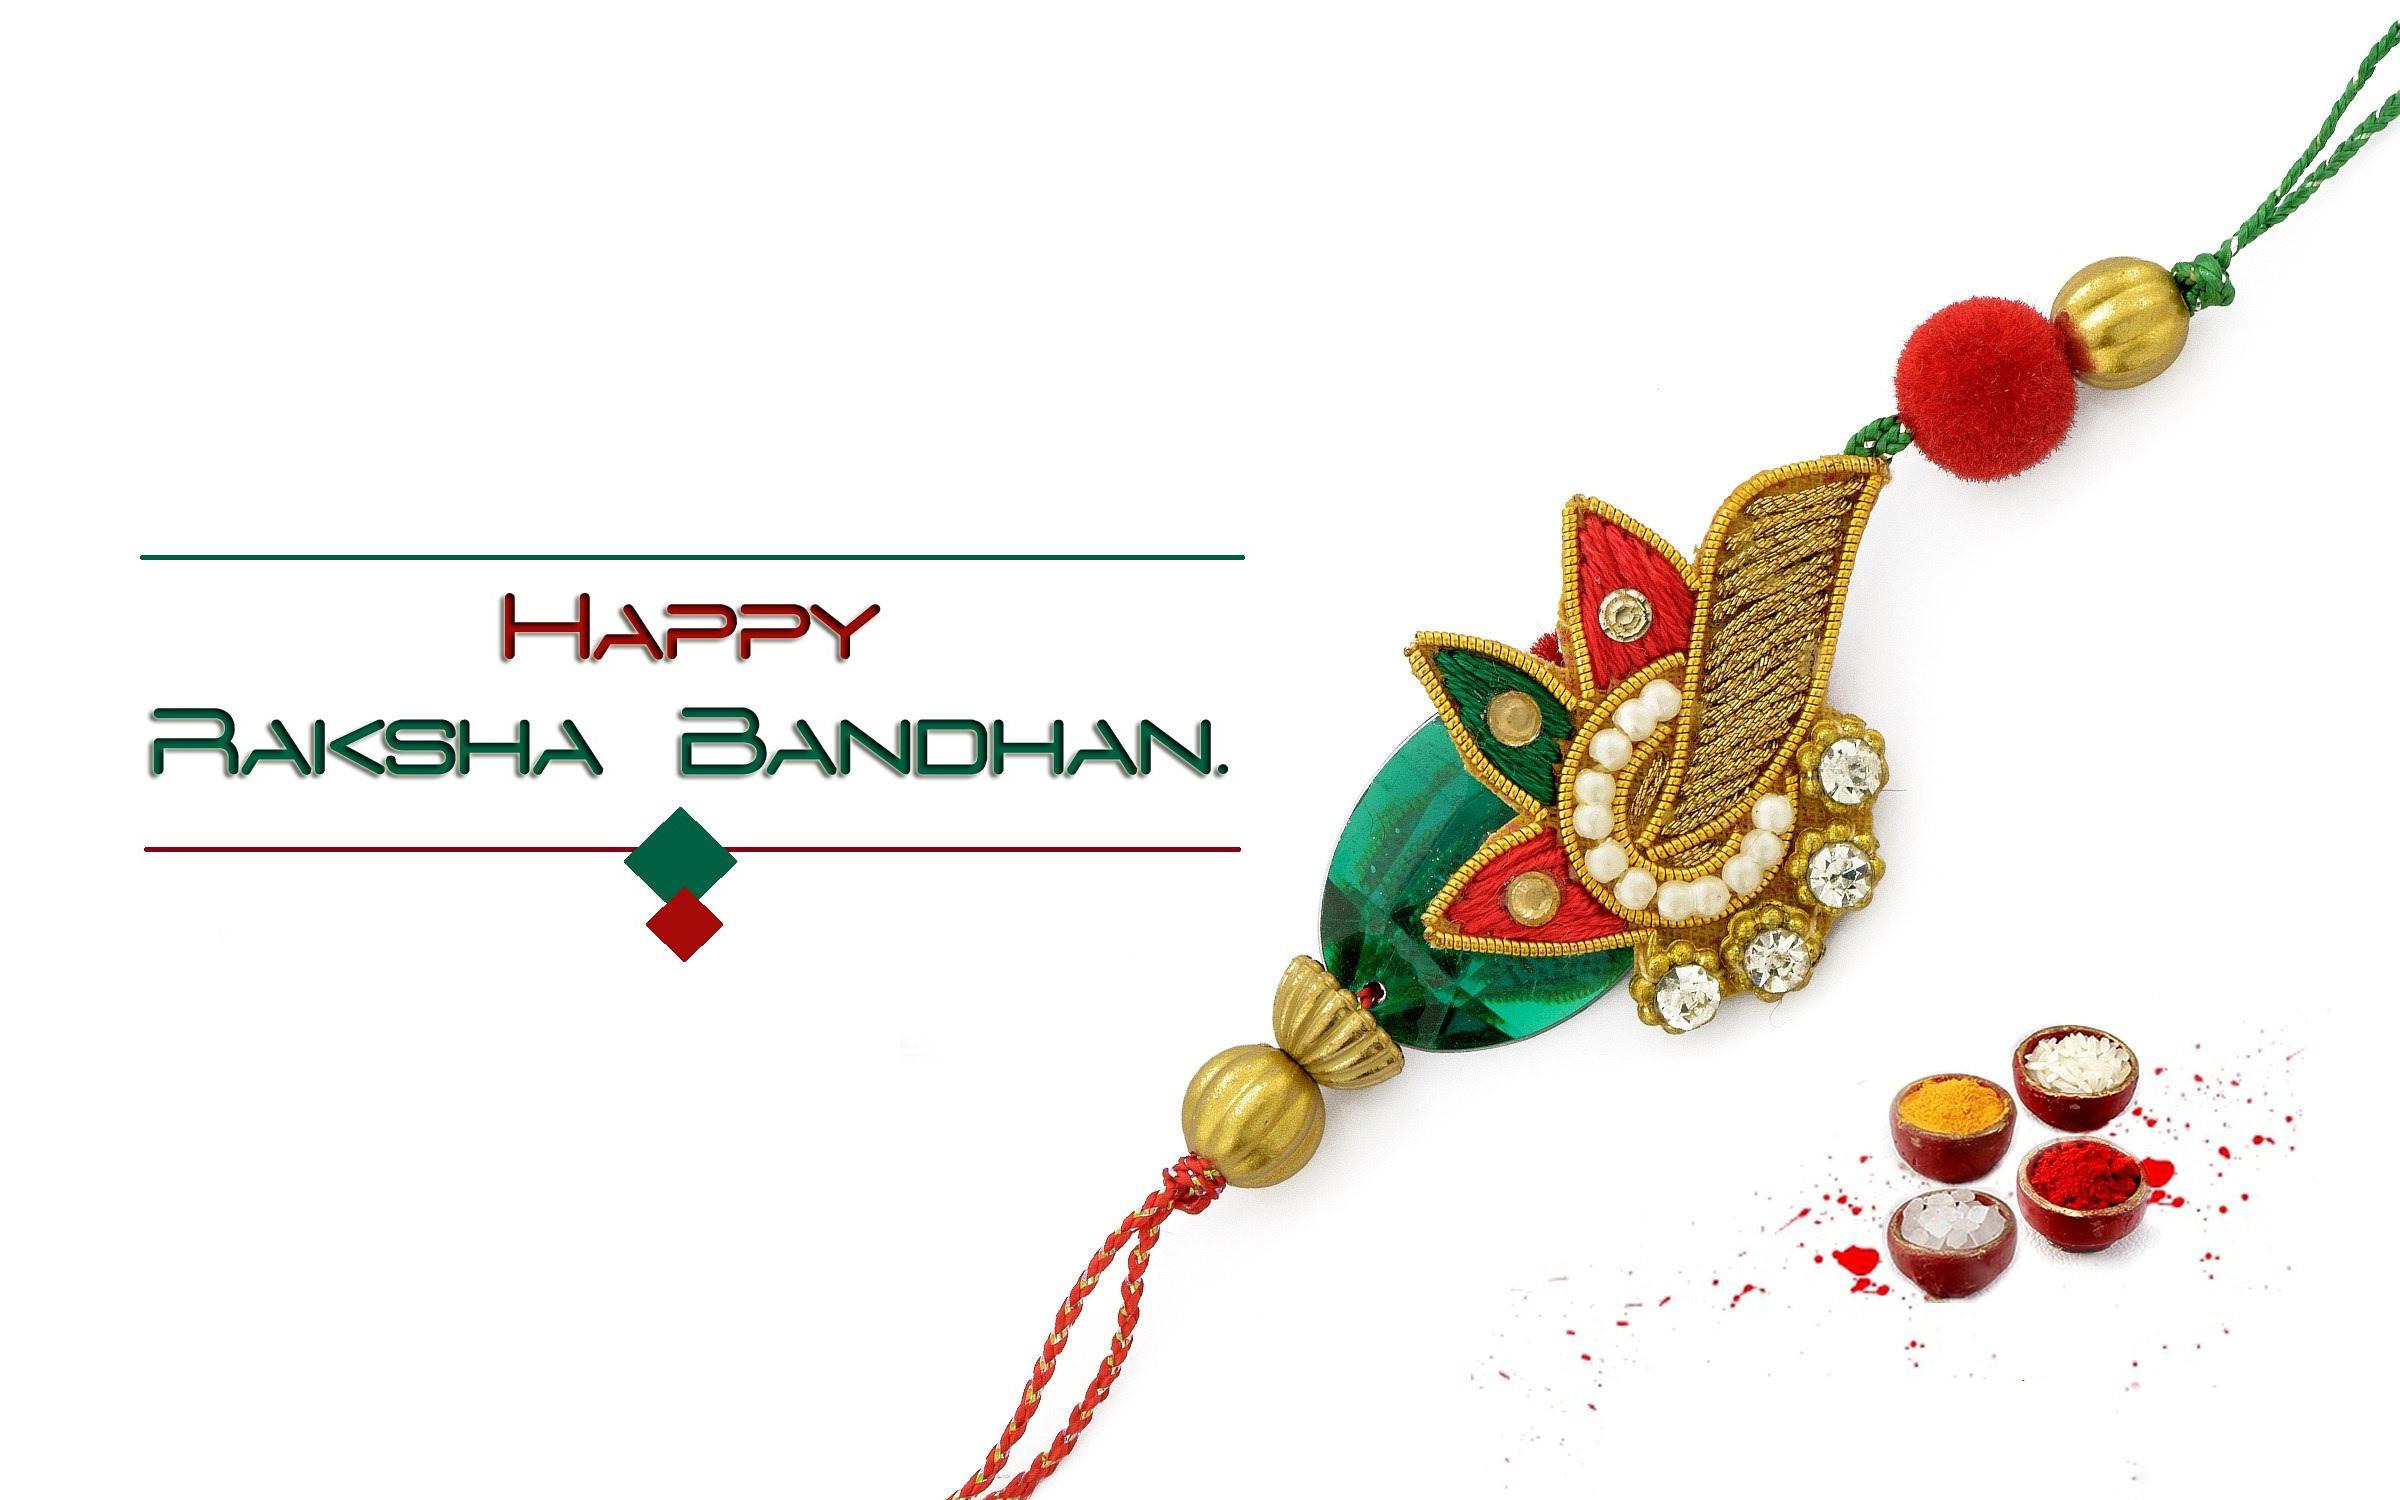 raksha bandhan images hd download